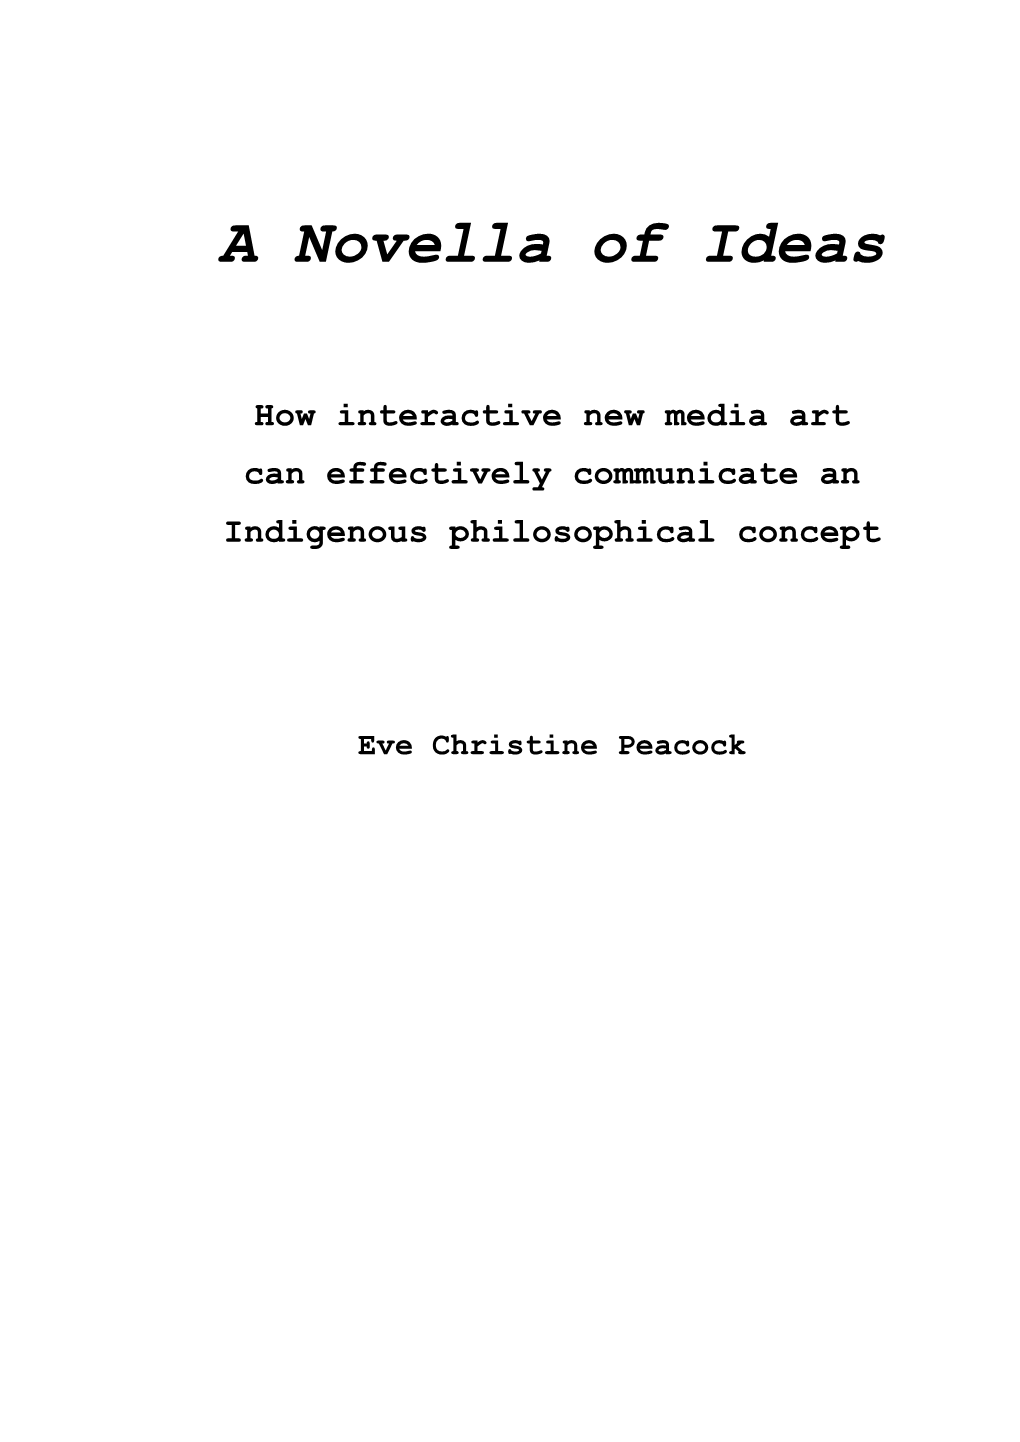 Eve Christine Peacock Thesis (PDF 624Kb)